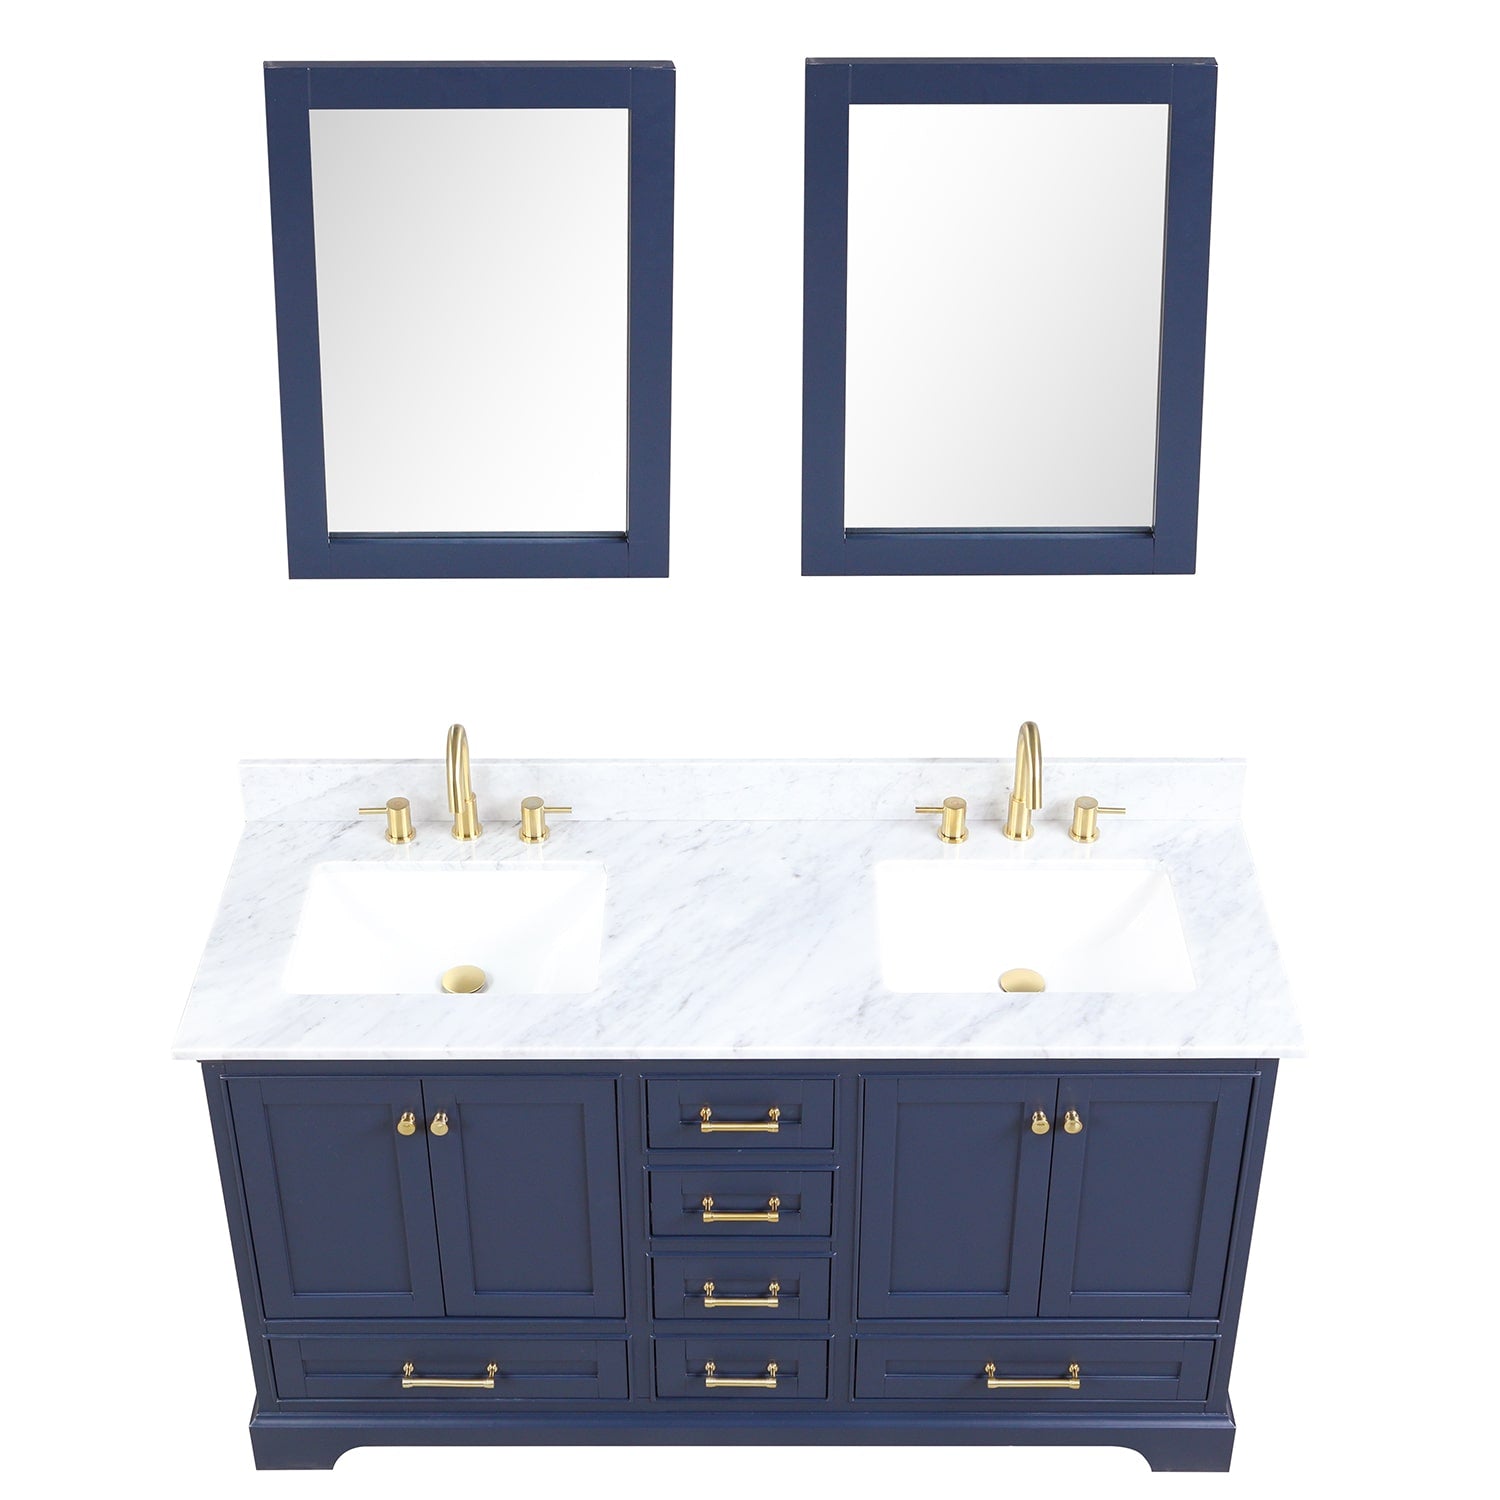 Copenhagen 60″ Bathroom Vanity with Double Sink Marble Countertop - Contemporary Bathroom Vanity